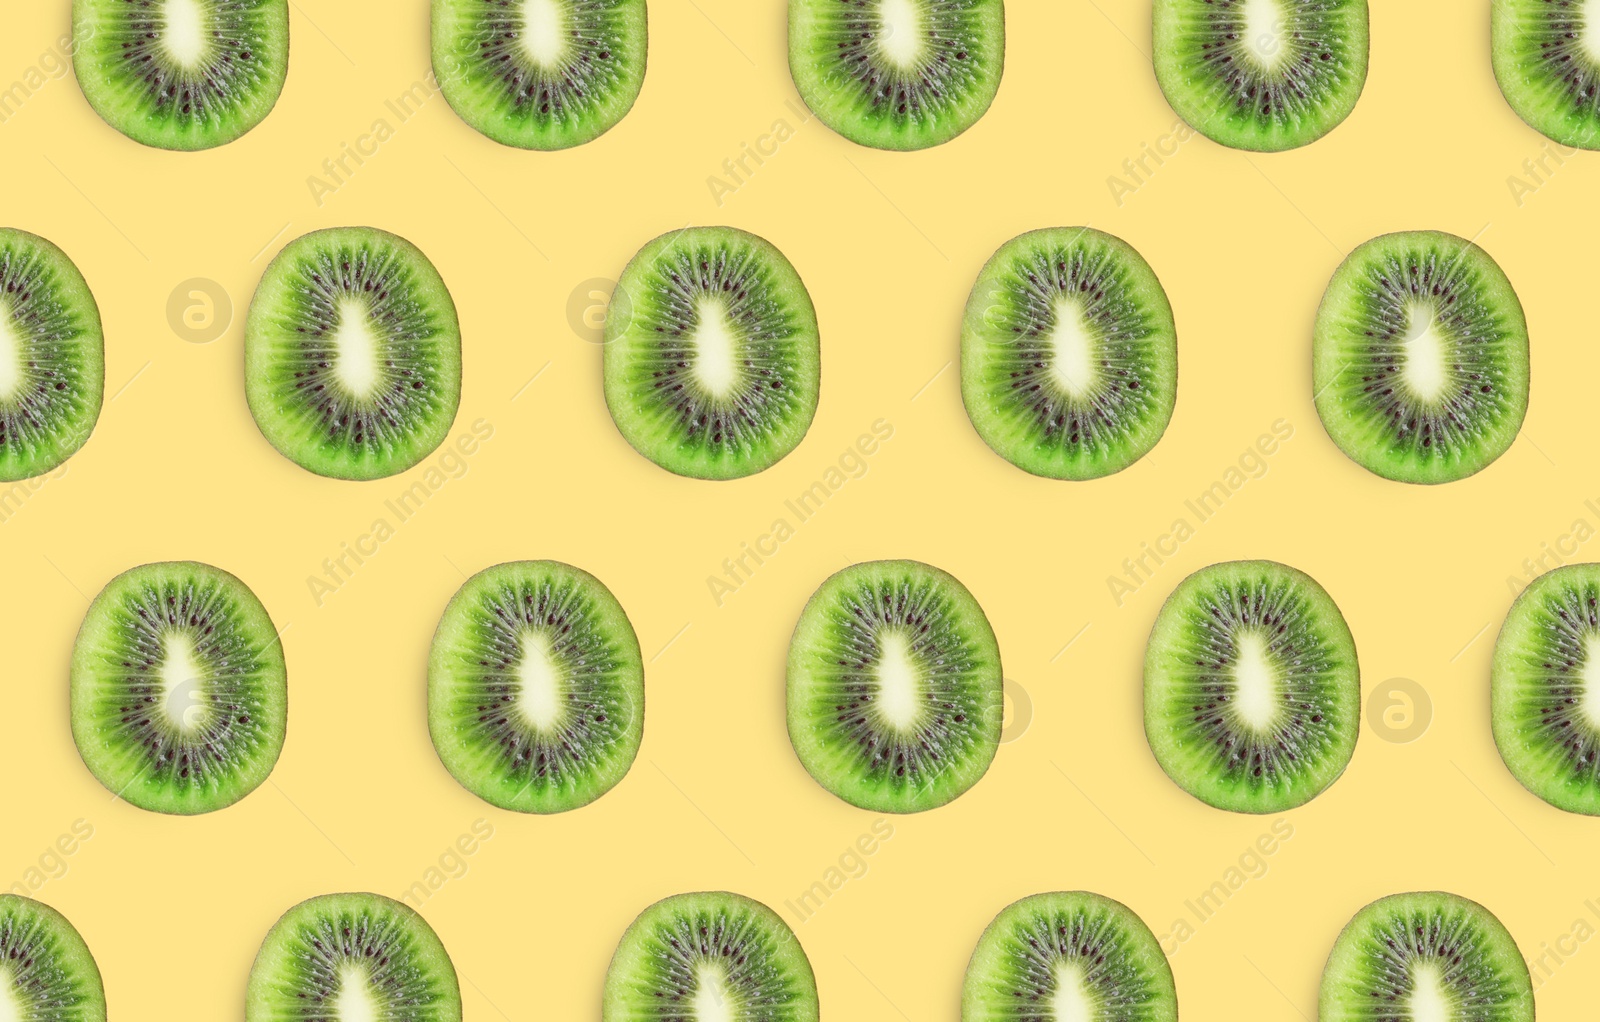 Image of Slices of kiwi fruits on yellow background, flat lay